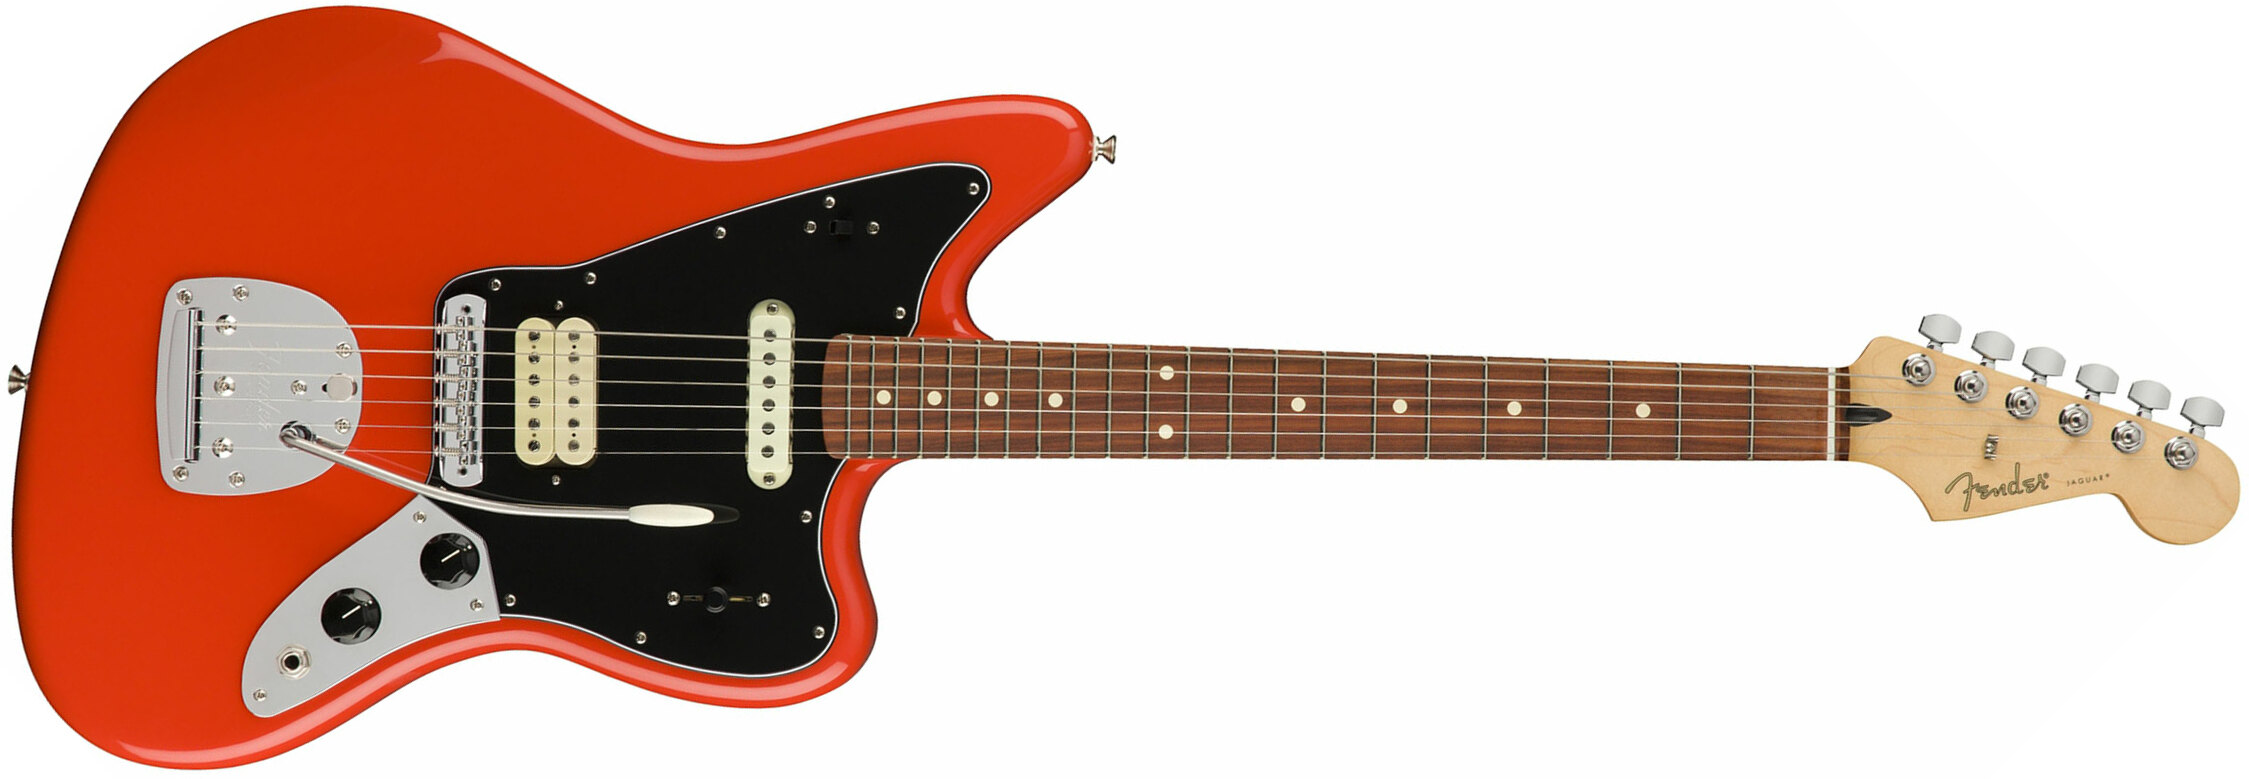 Fender Jaguar Player Mex Hs Pf - Sonic Red - Retro rock electric guitar - Main picture